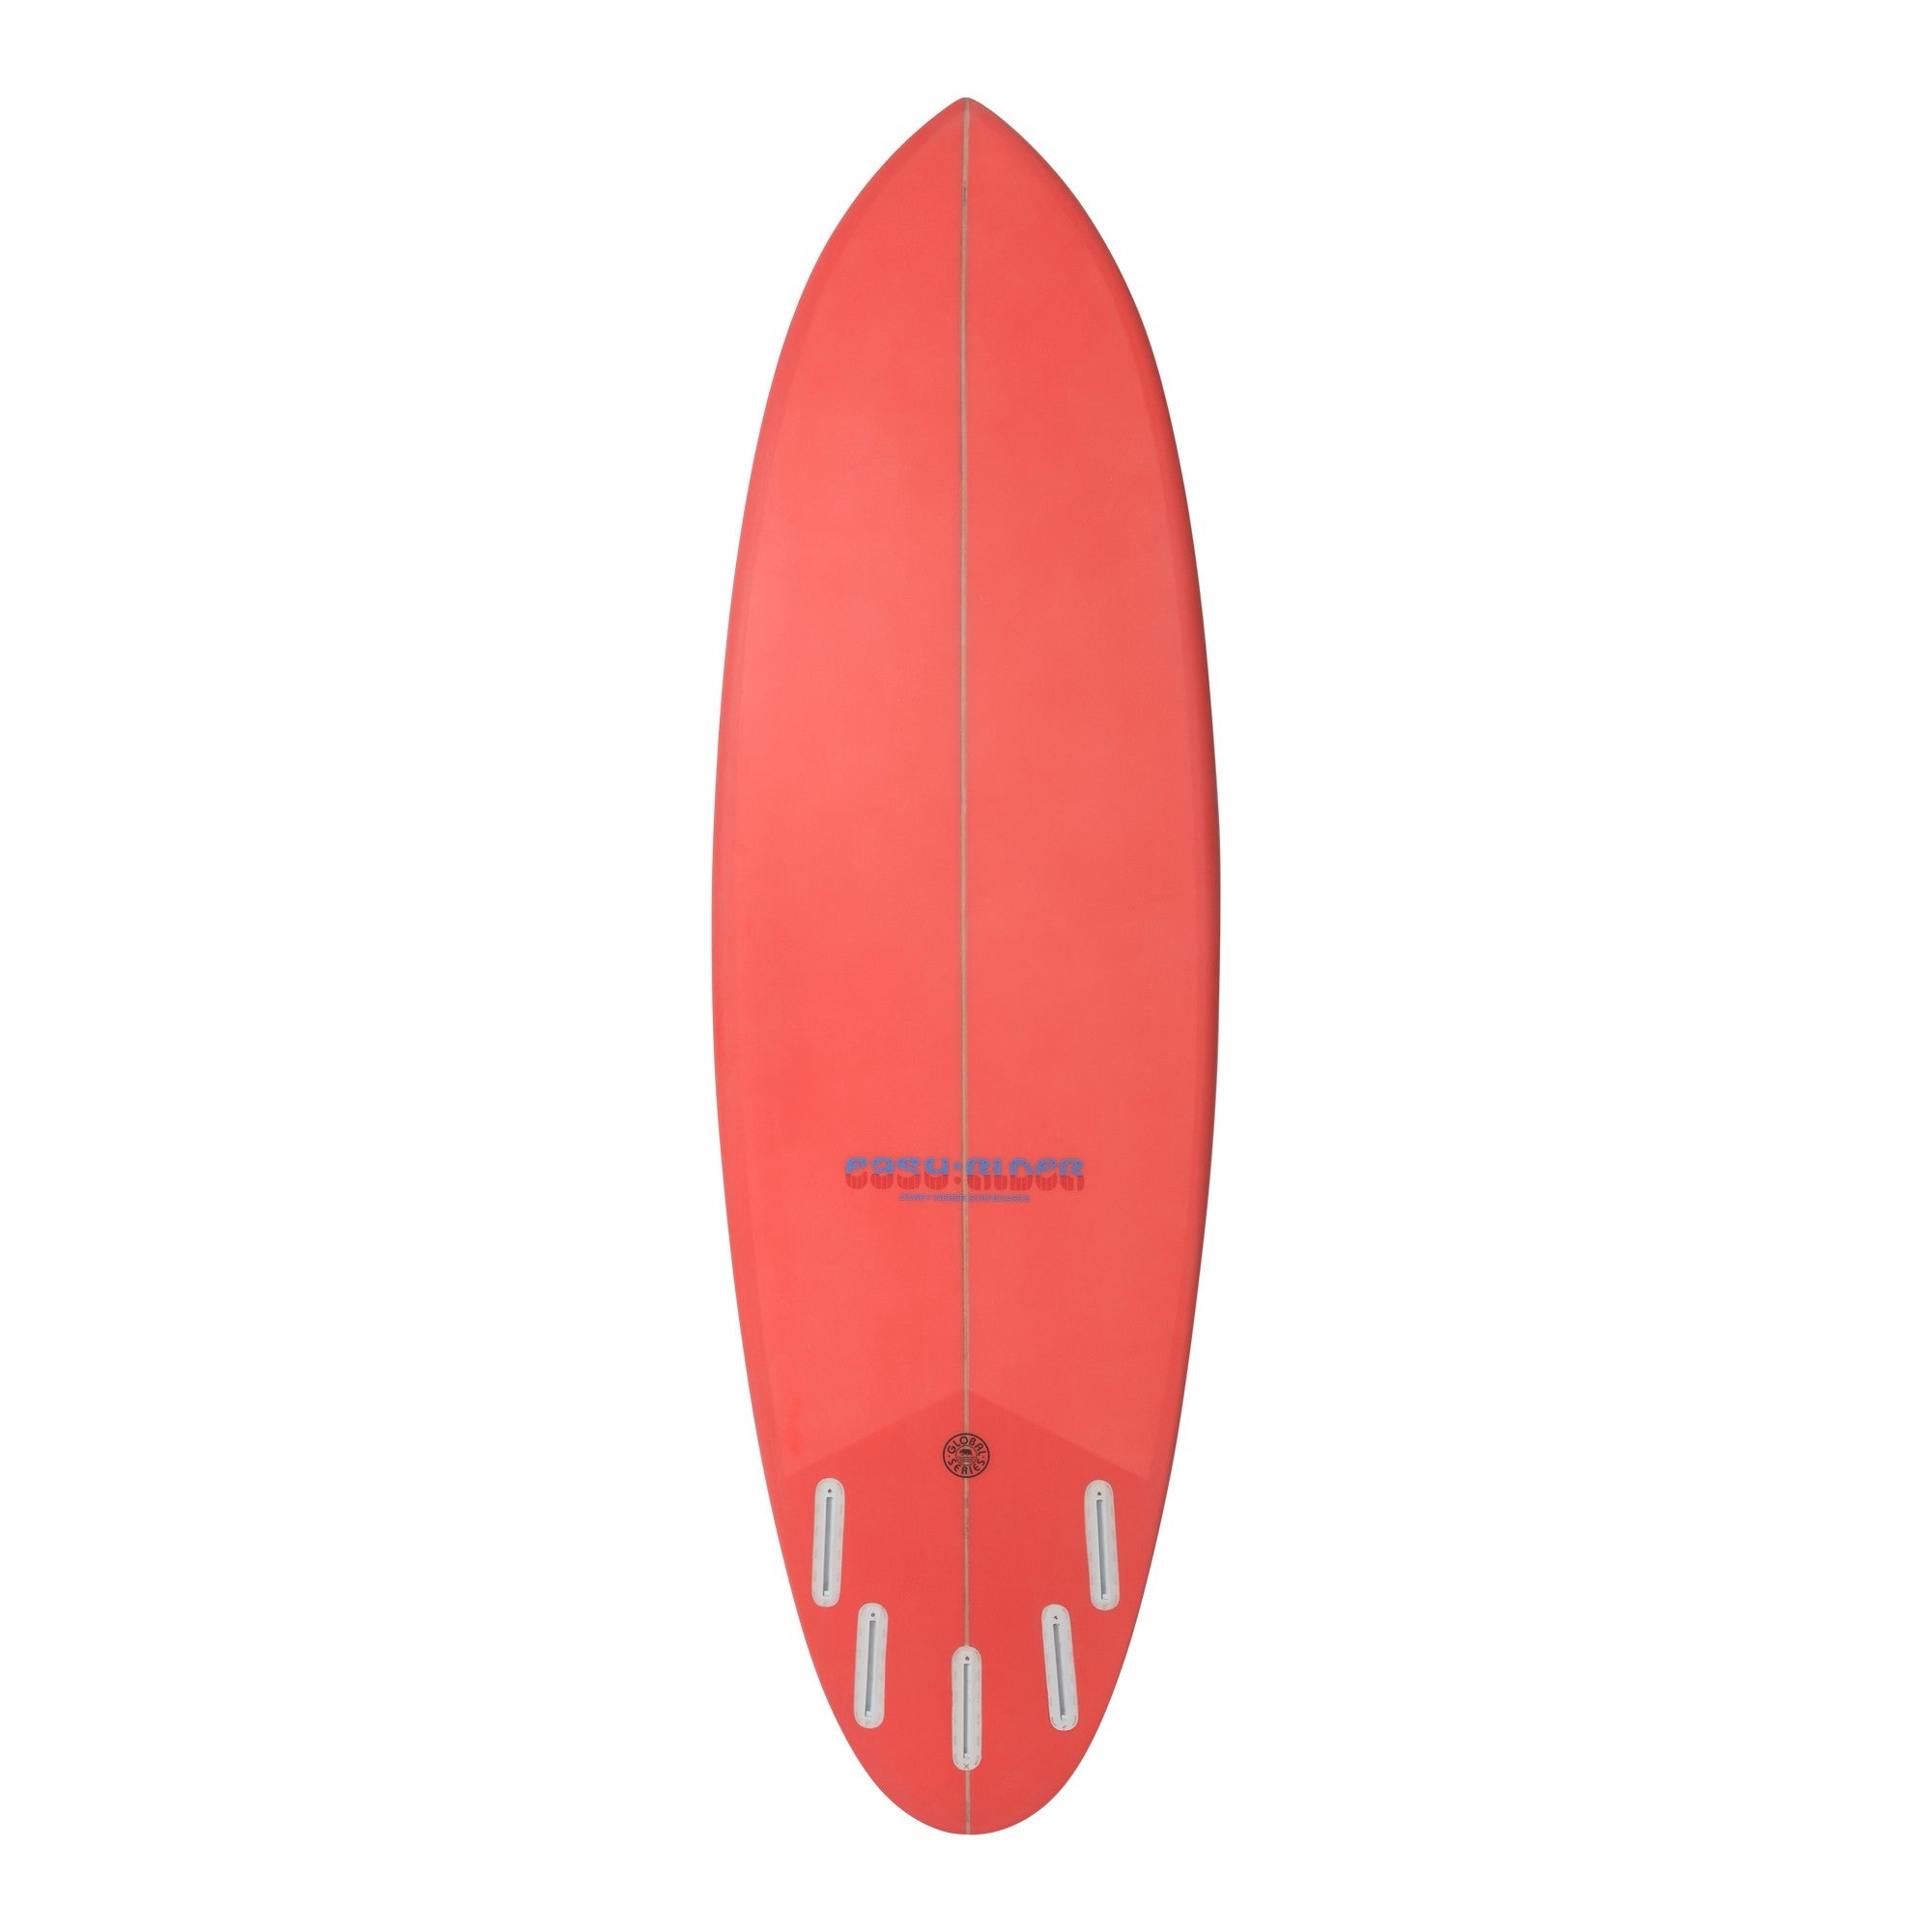 WEBER SURFBOARDS - Easy Rider 6'0 - Red